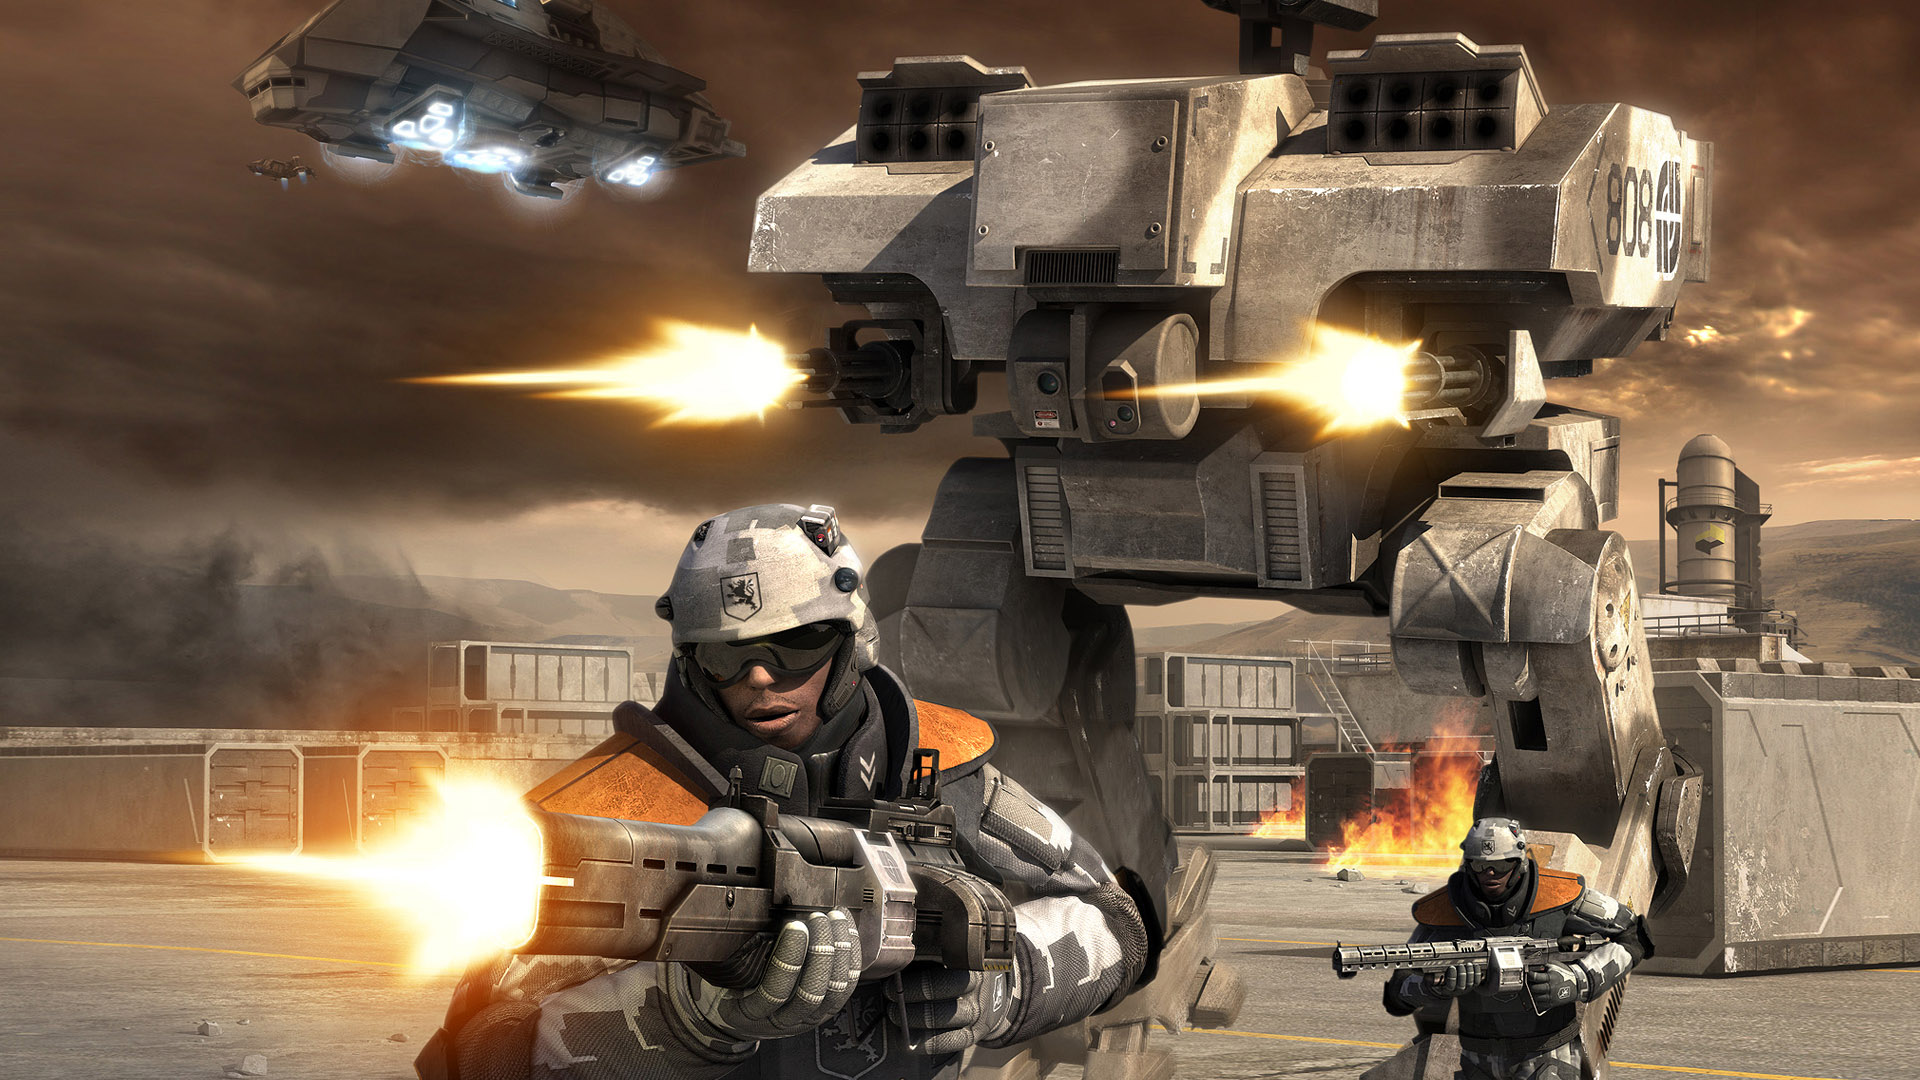 Video Game Battlefield 2142 HD Wallpaper | Background Image